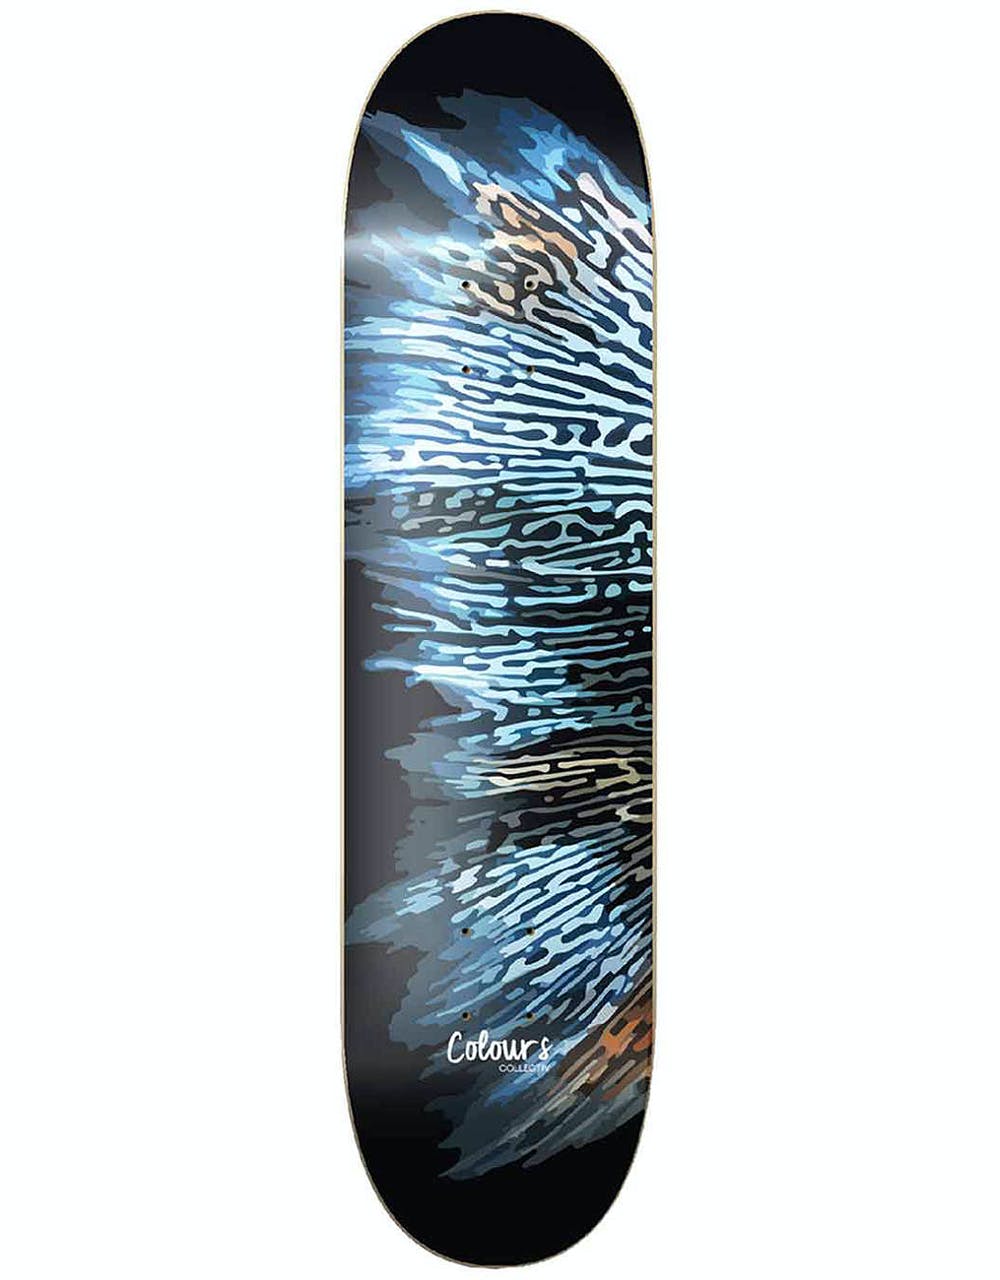 Colours Collectiv x Footprint Fish Camo Skateboard Deck - 8.25"